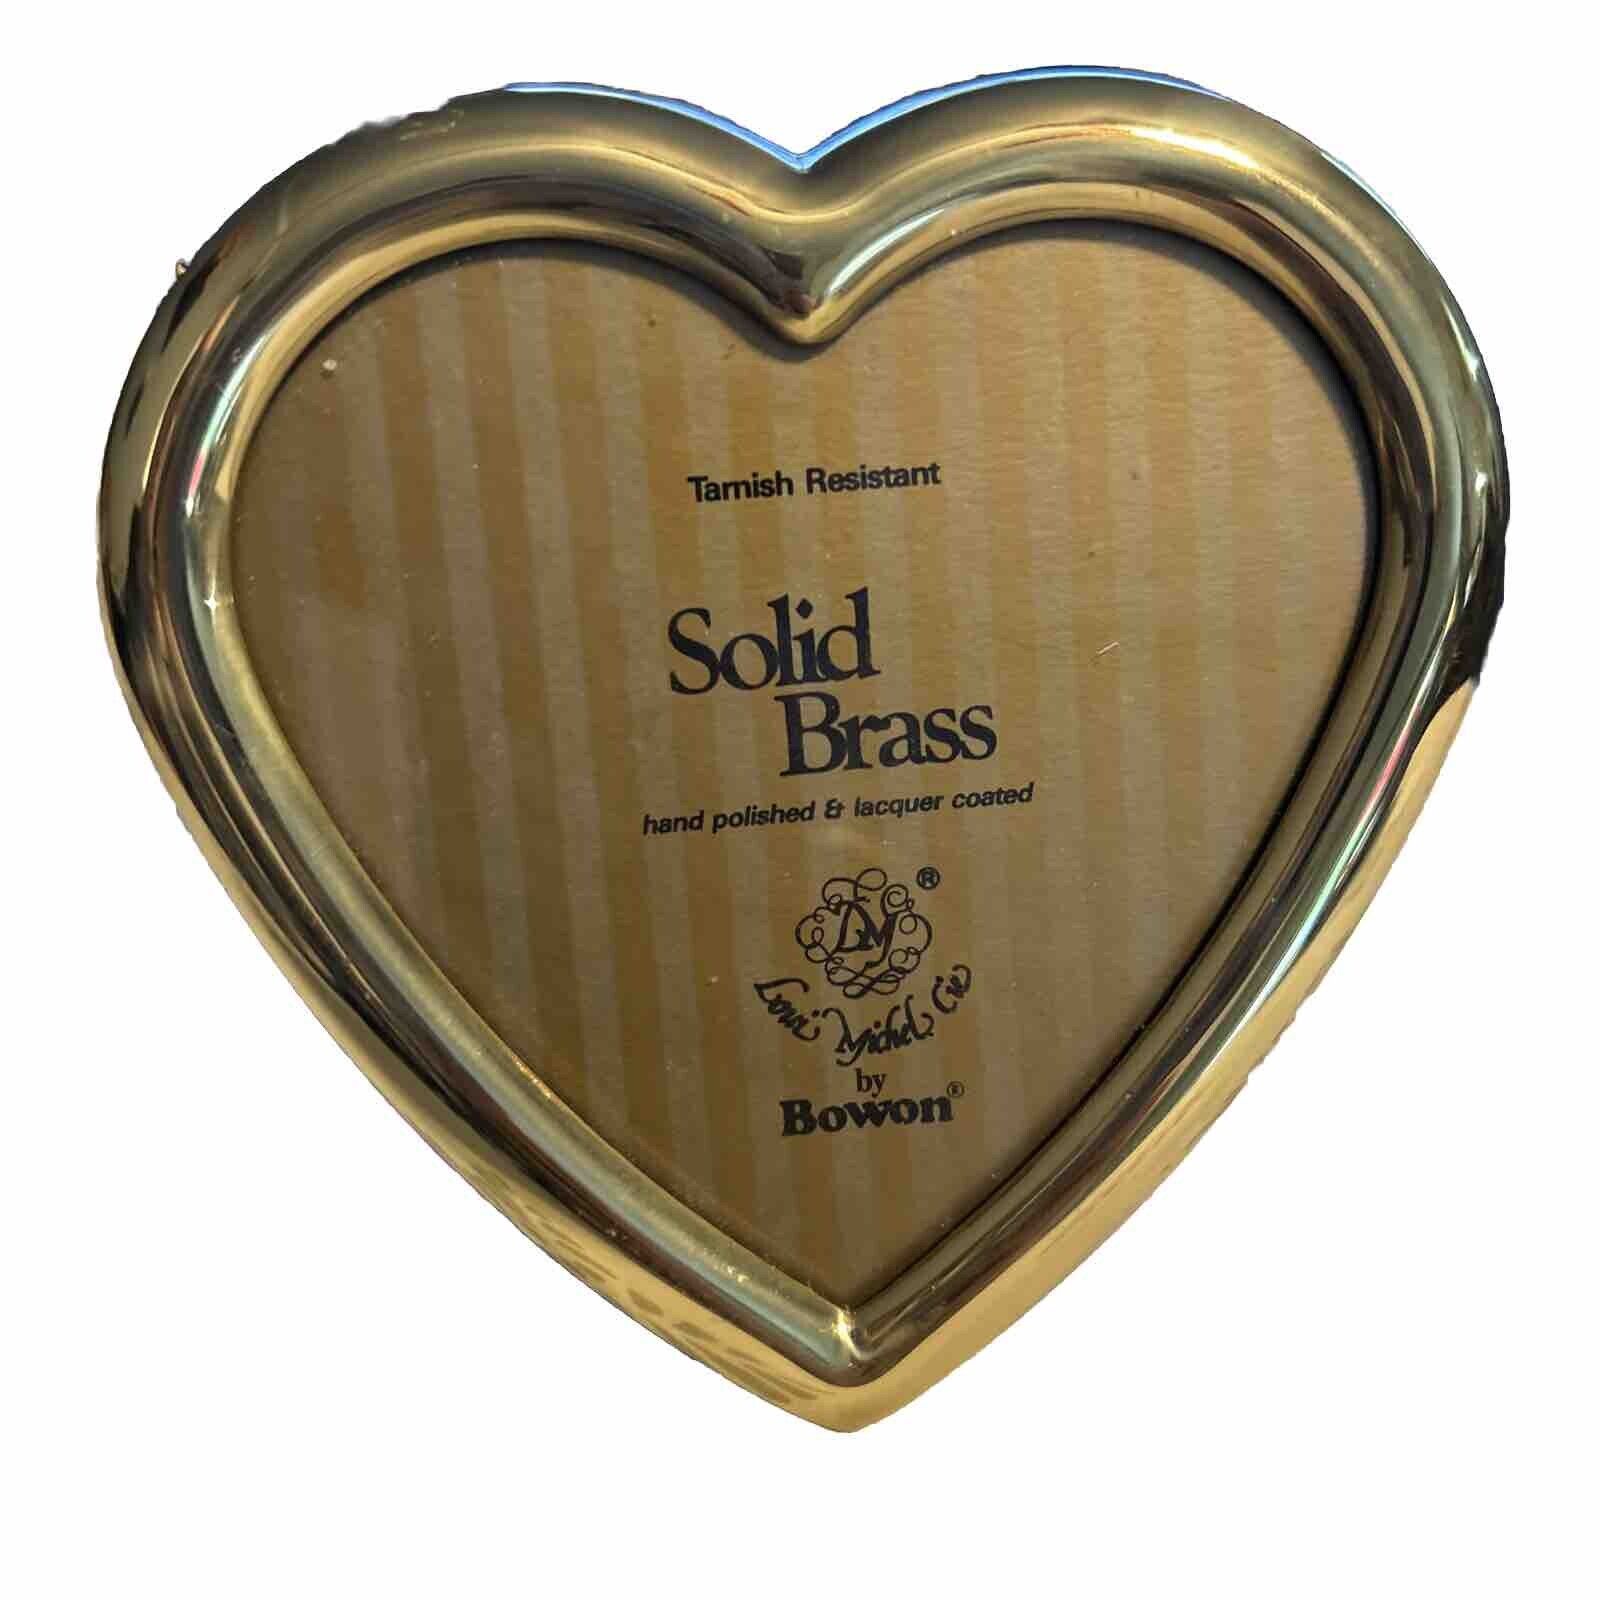 Solid Brass Bowon Vintage Small Photo Frame Hand Polished 2.5”x3.5” Heart Shape